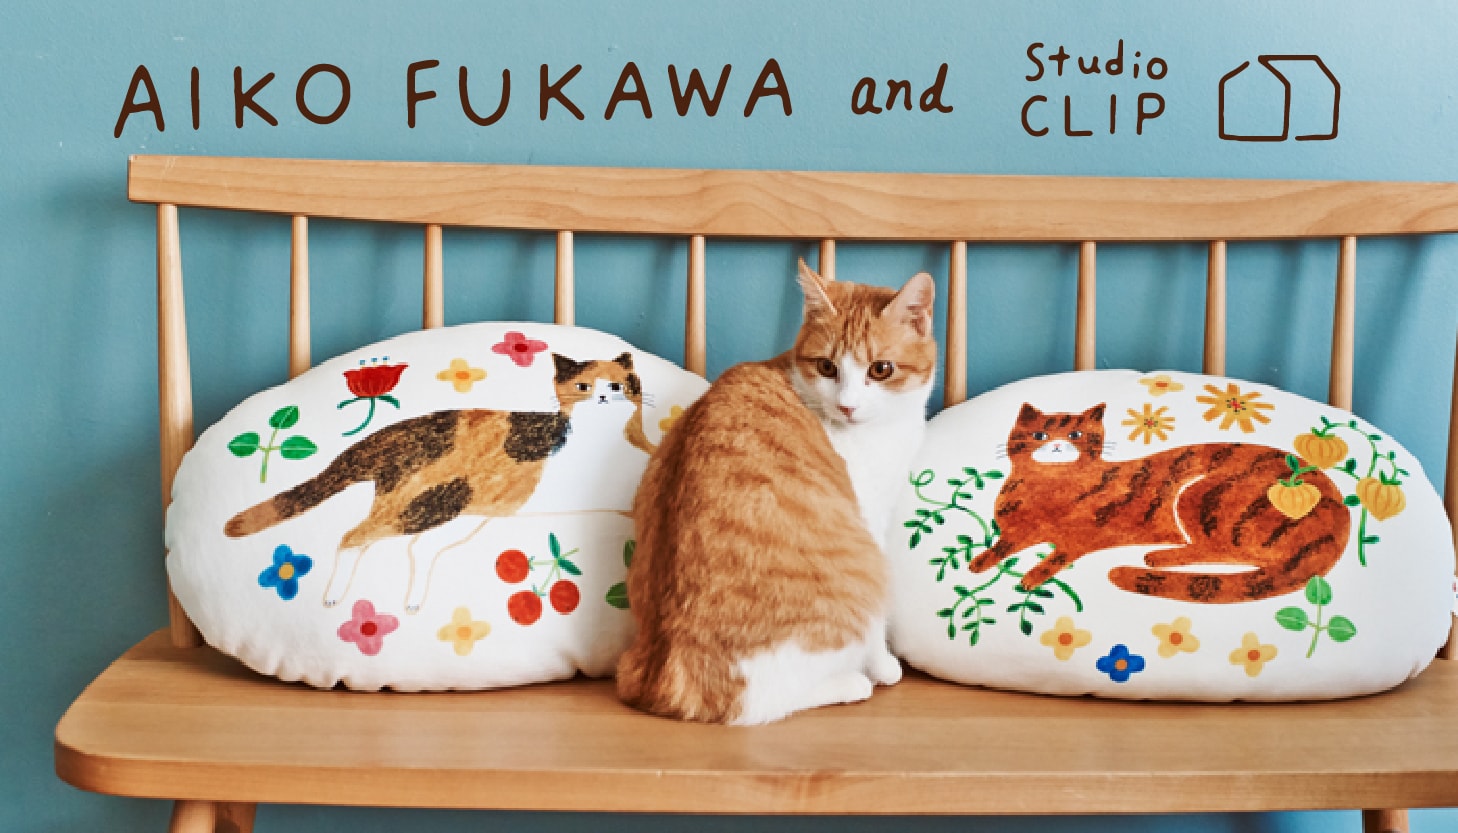 AIKO FUKAWA and studio CLIP